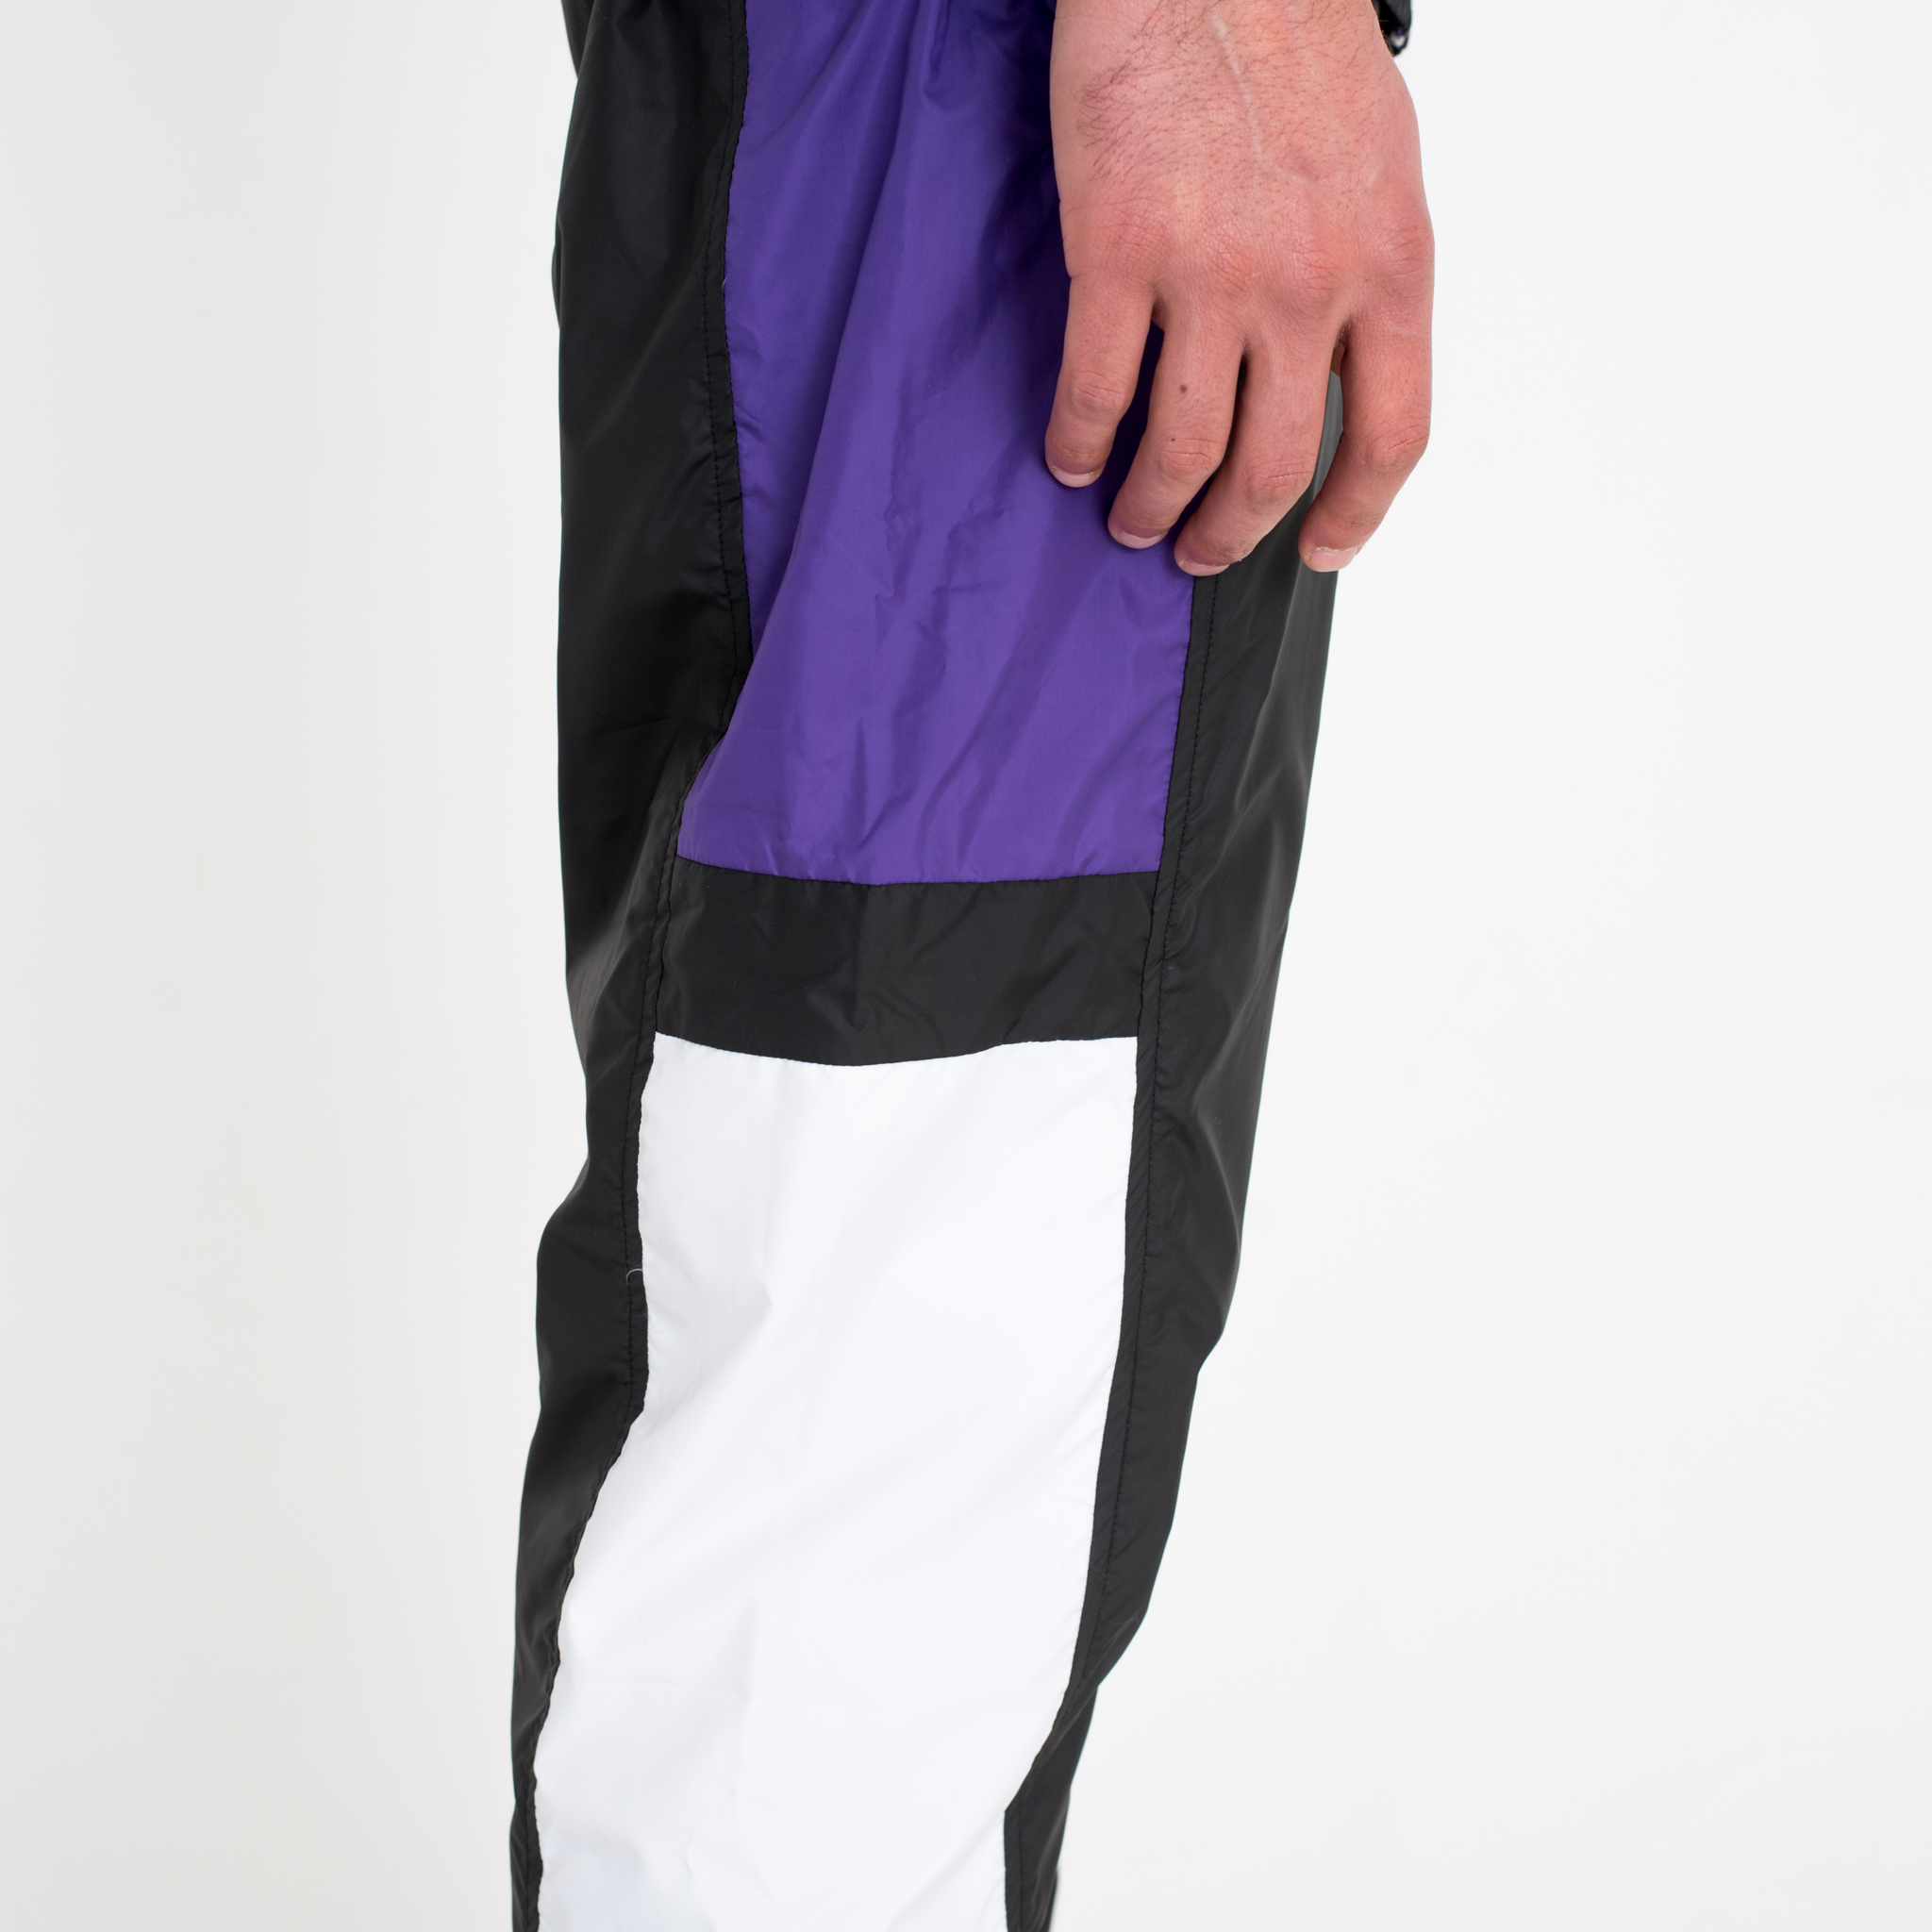 Pantaloni della tuta Colour Block New Era neri, viola e bianchi